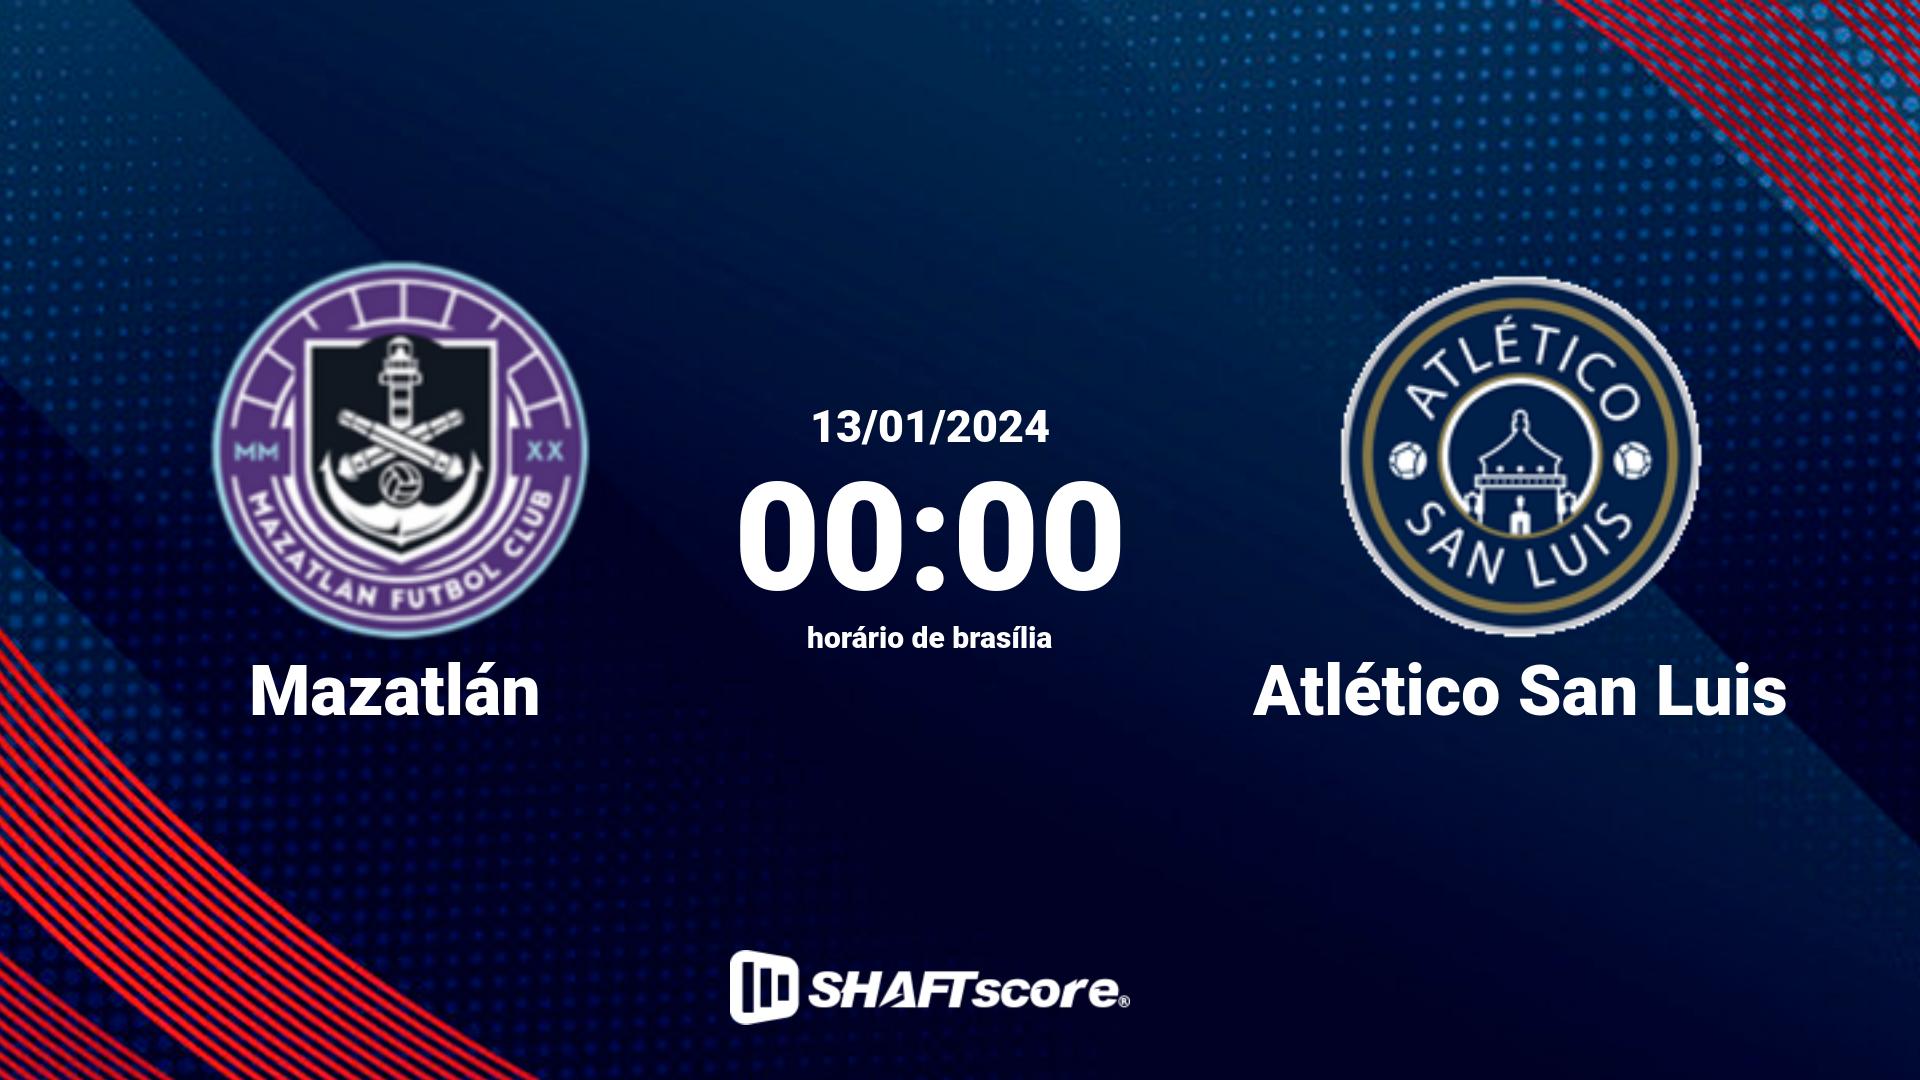 Estatísticas do jogo Mazatlán vs Atlético San Luis 13.01 00:00